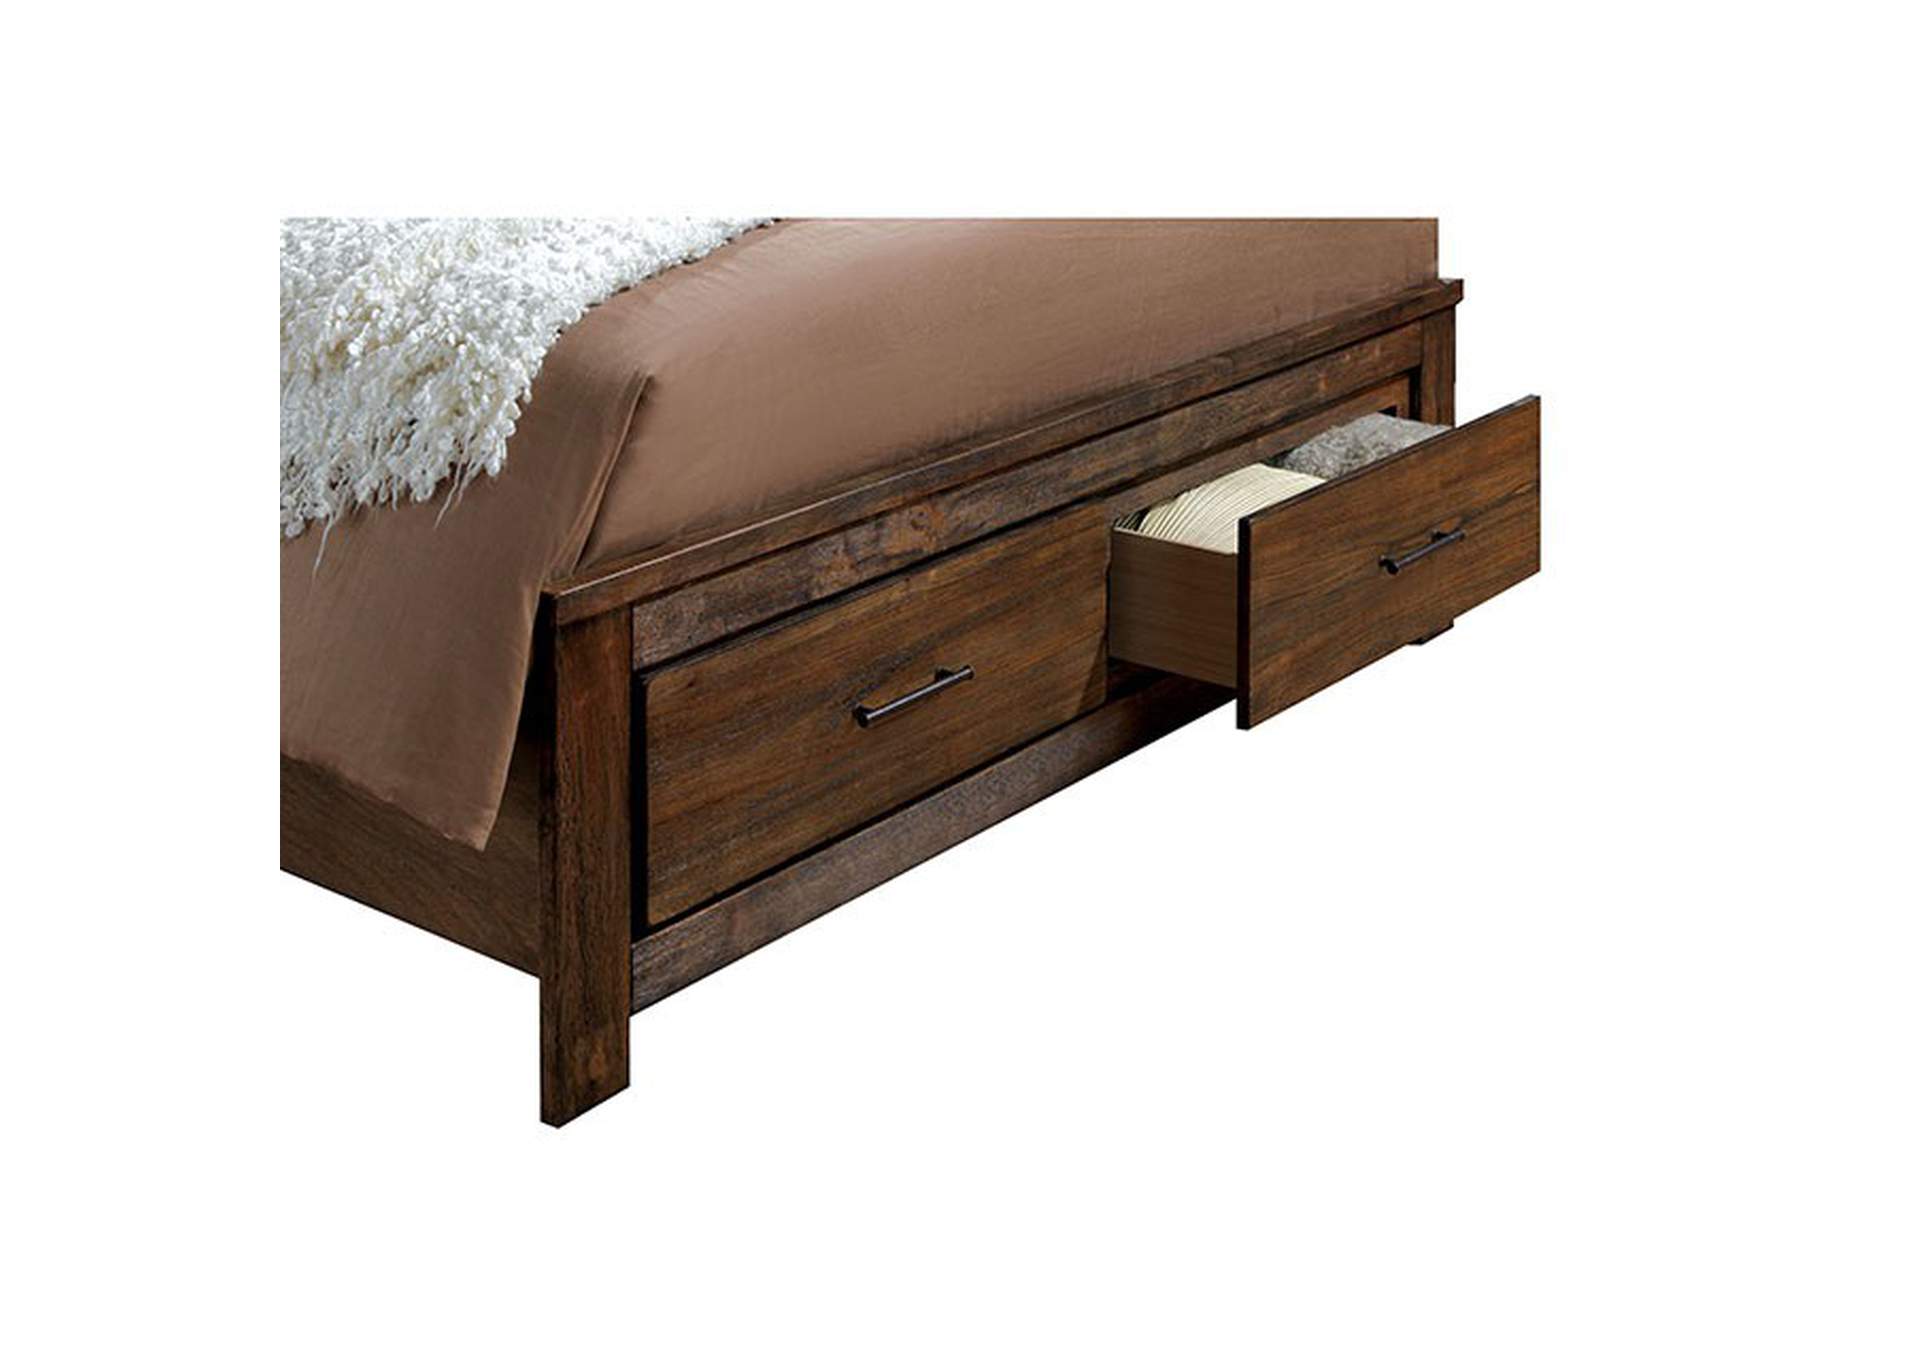 Elkton Oak Eastern King Bed,Furniture of America